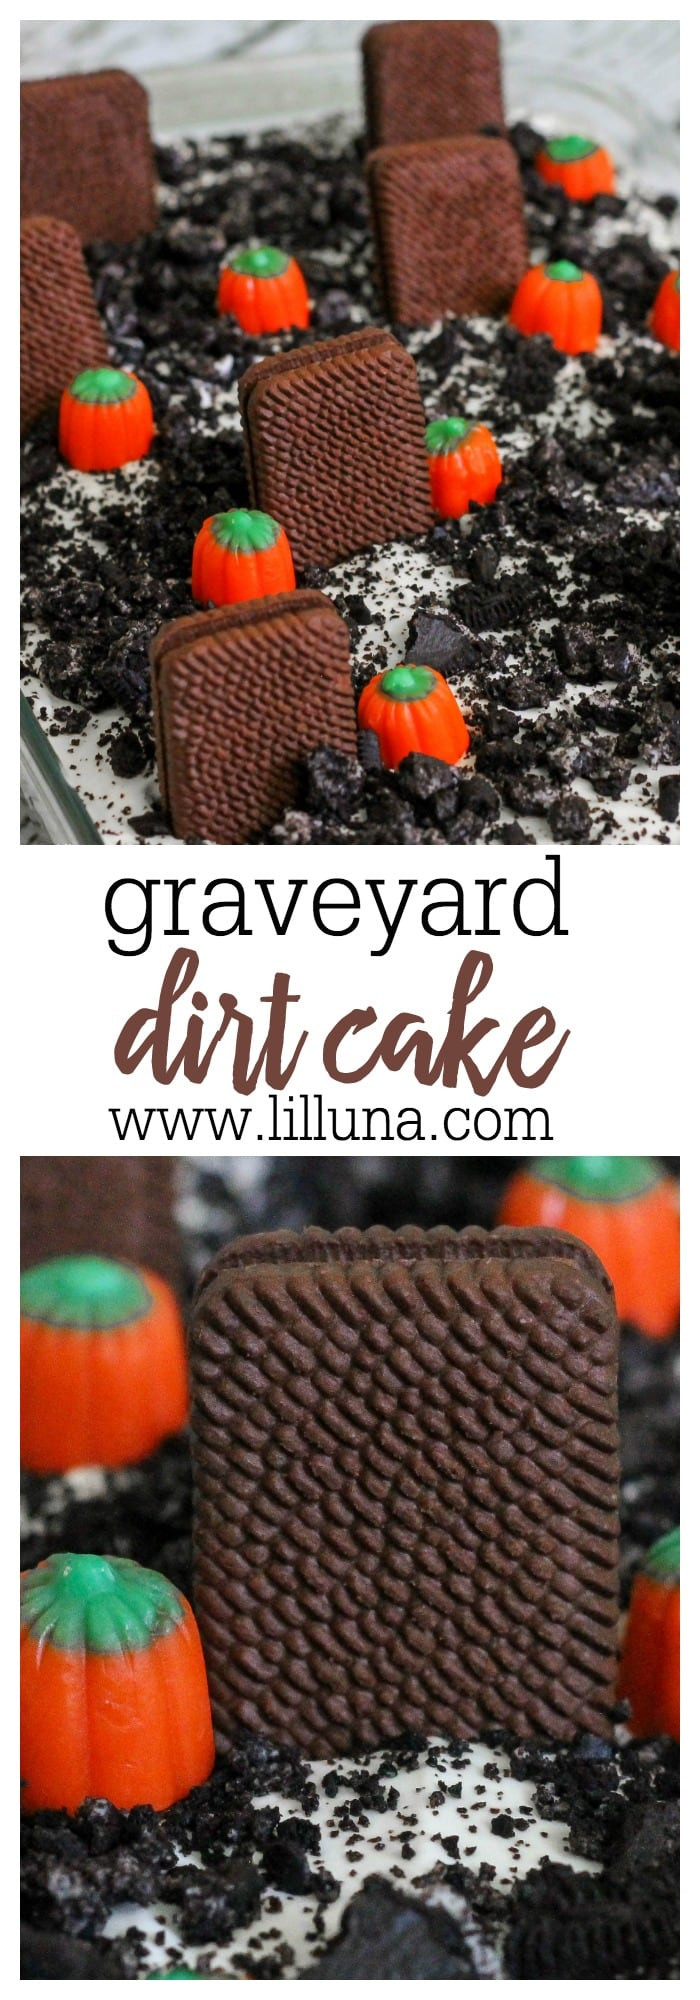 Graveyard Cakes Halloween
 Graveyard Dirt Cake